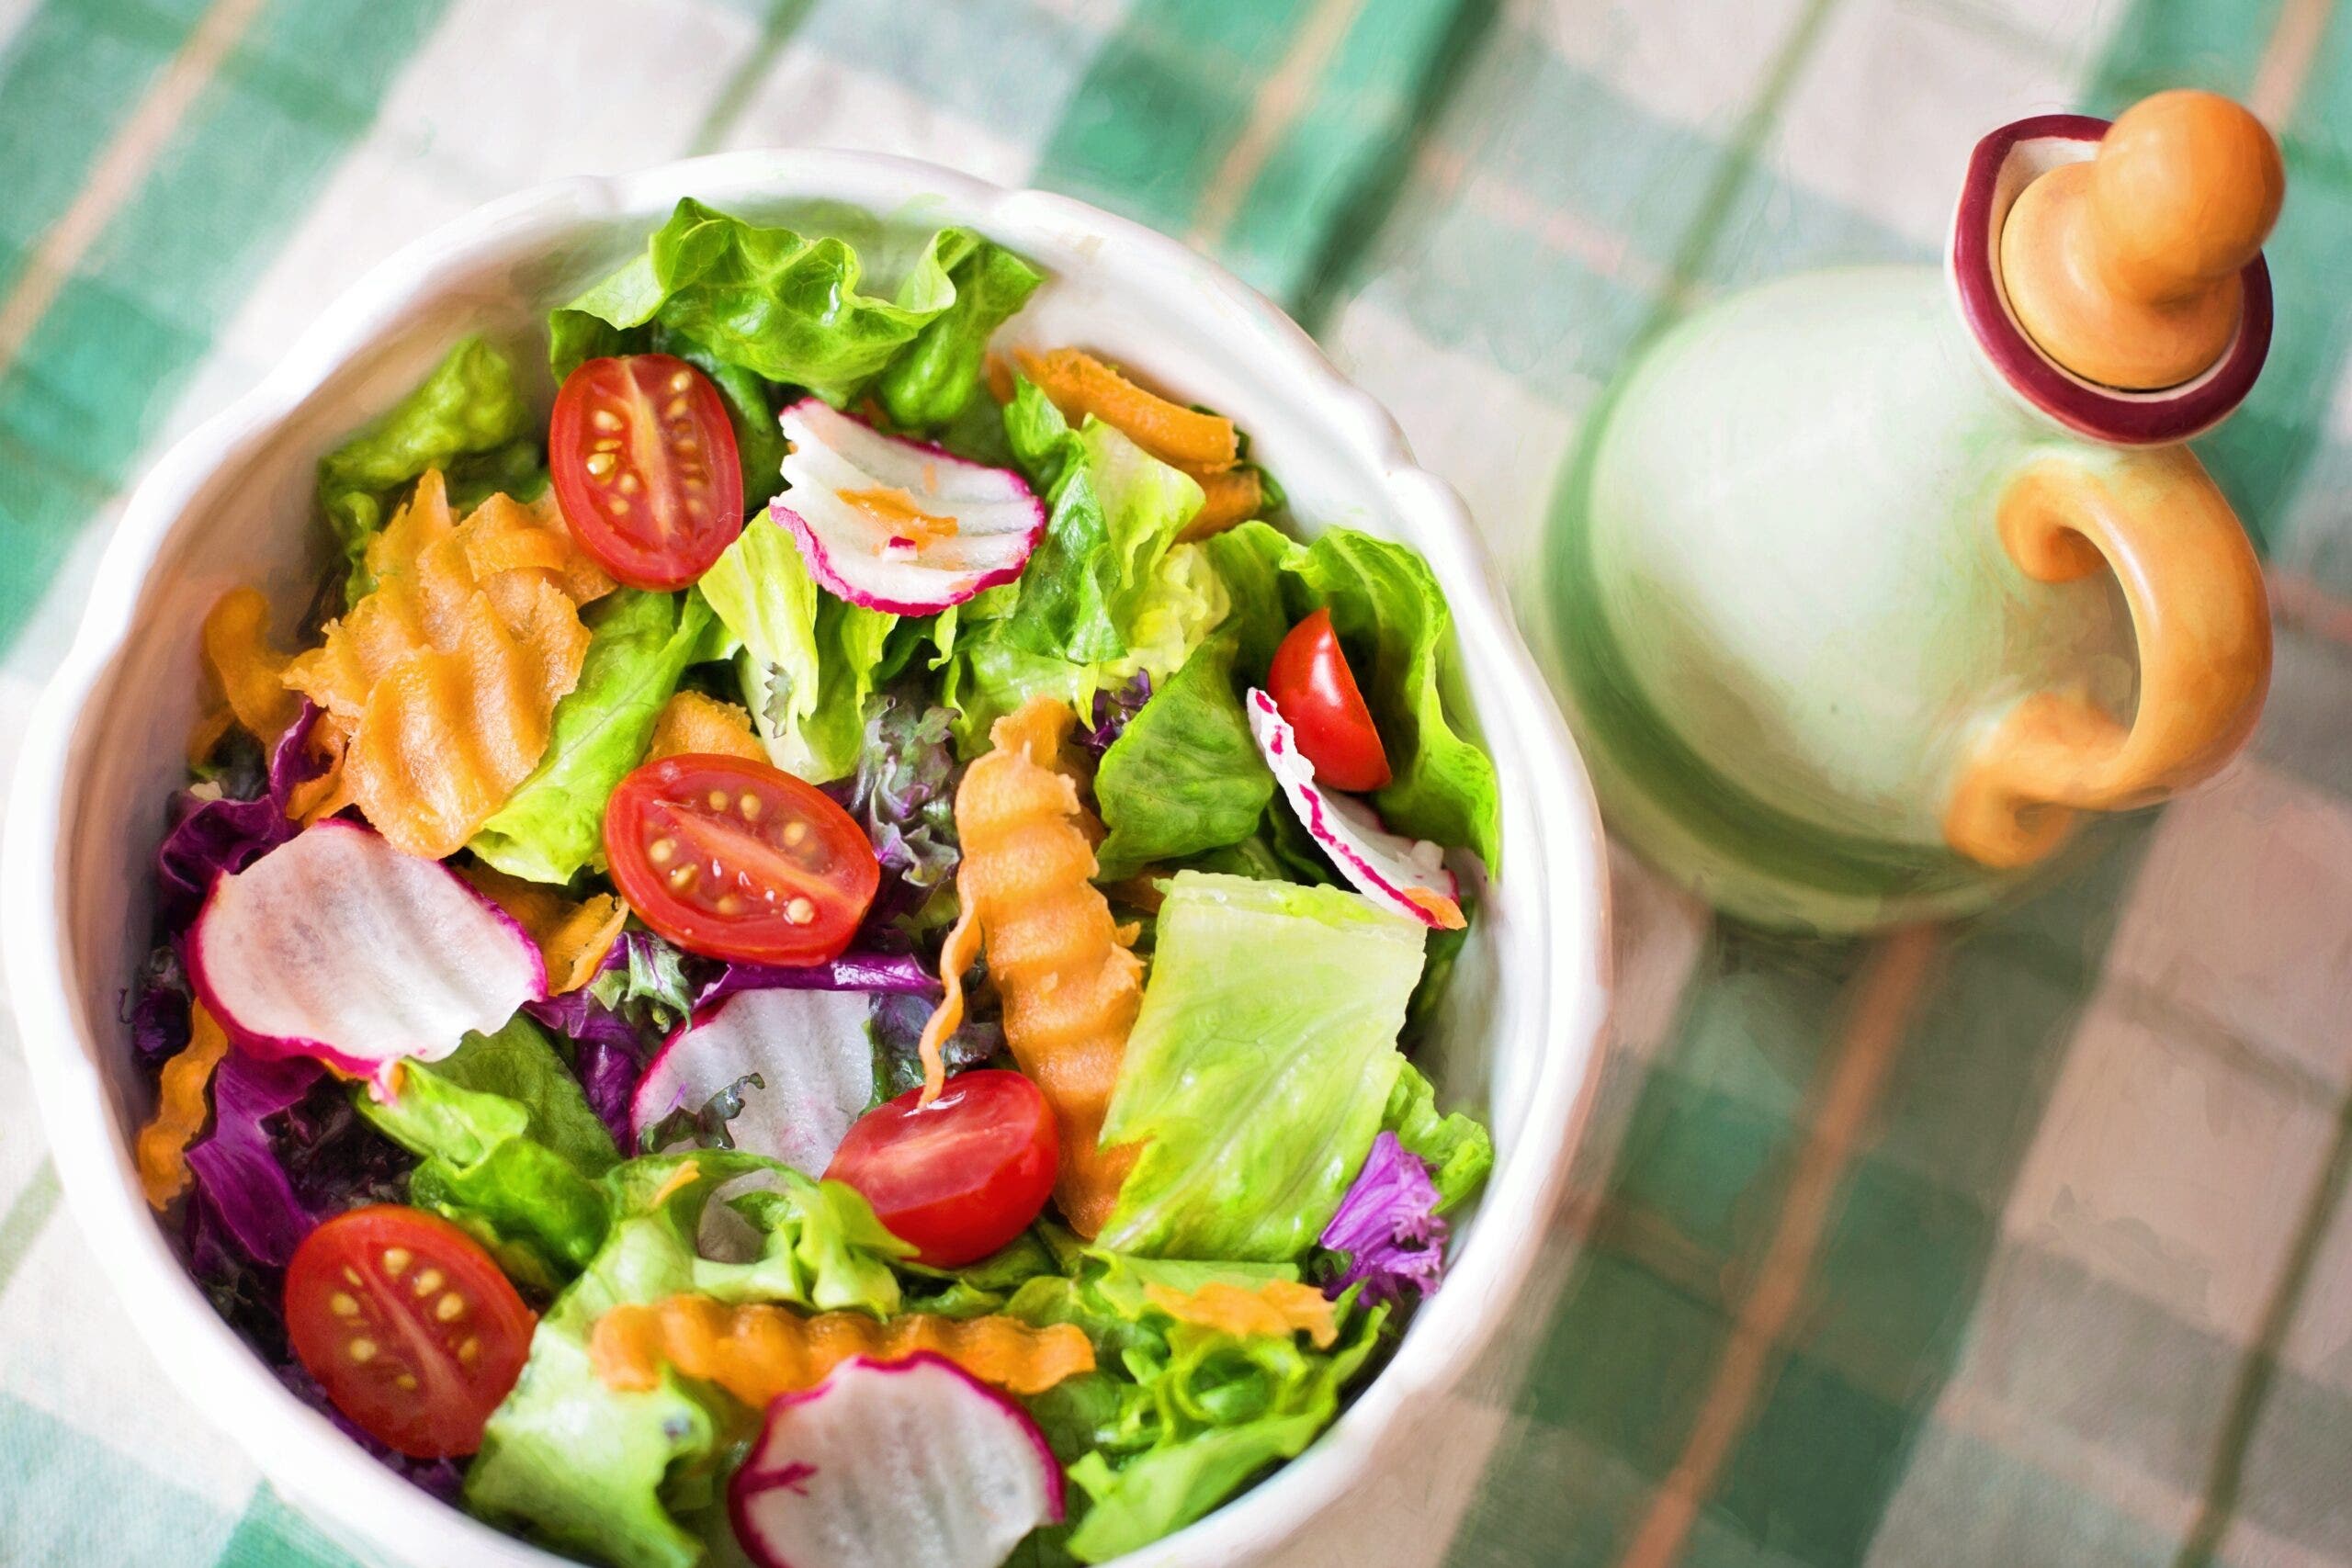 https://www.prolinerangehoods.com/blog/wp-content/uploads/2020/05/close-up-of-salad-in-plate-257816-scaled.jpg